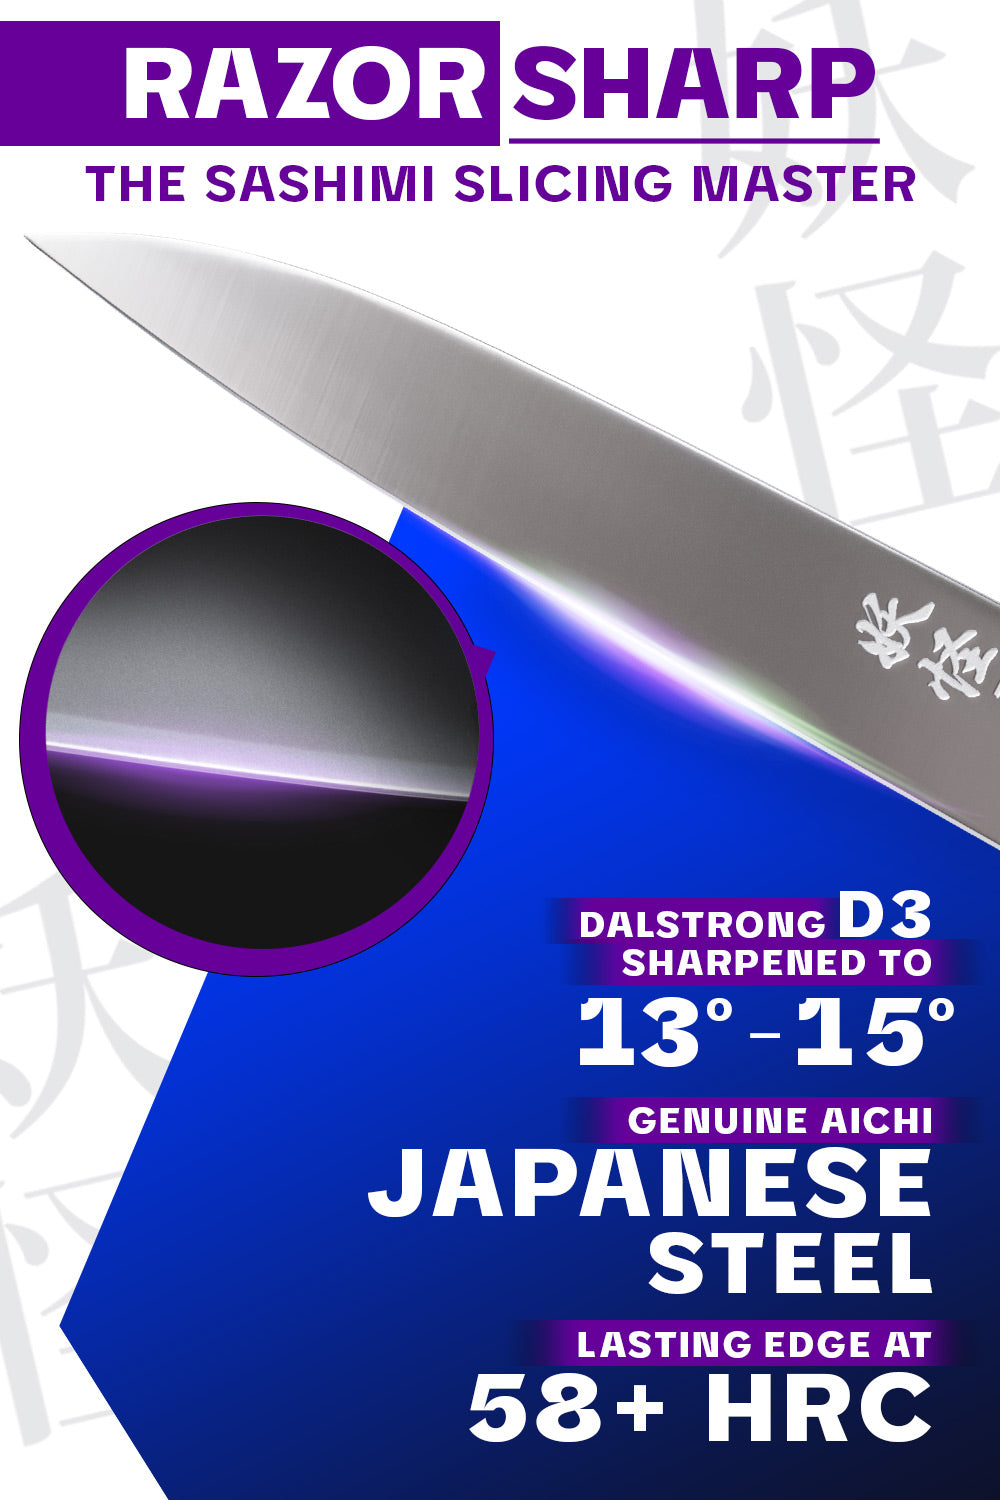 Dalstrong Yanagiba Knife - 10.5 inch Sushi Knife - Ronin Series - Single Bevel Blade - Japanese AUS-10V Damascus Steel - Asian Knife - Japanese